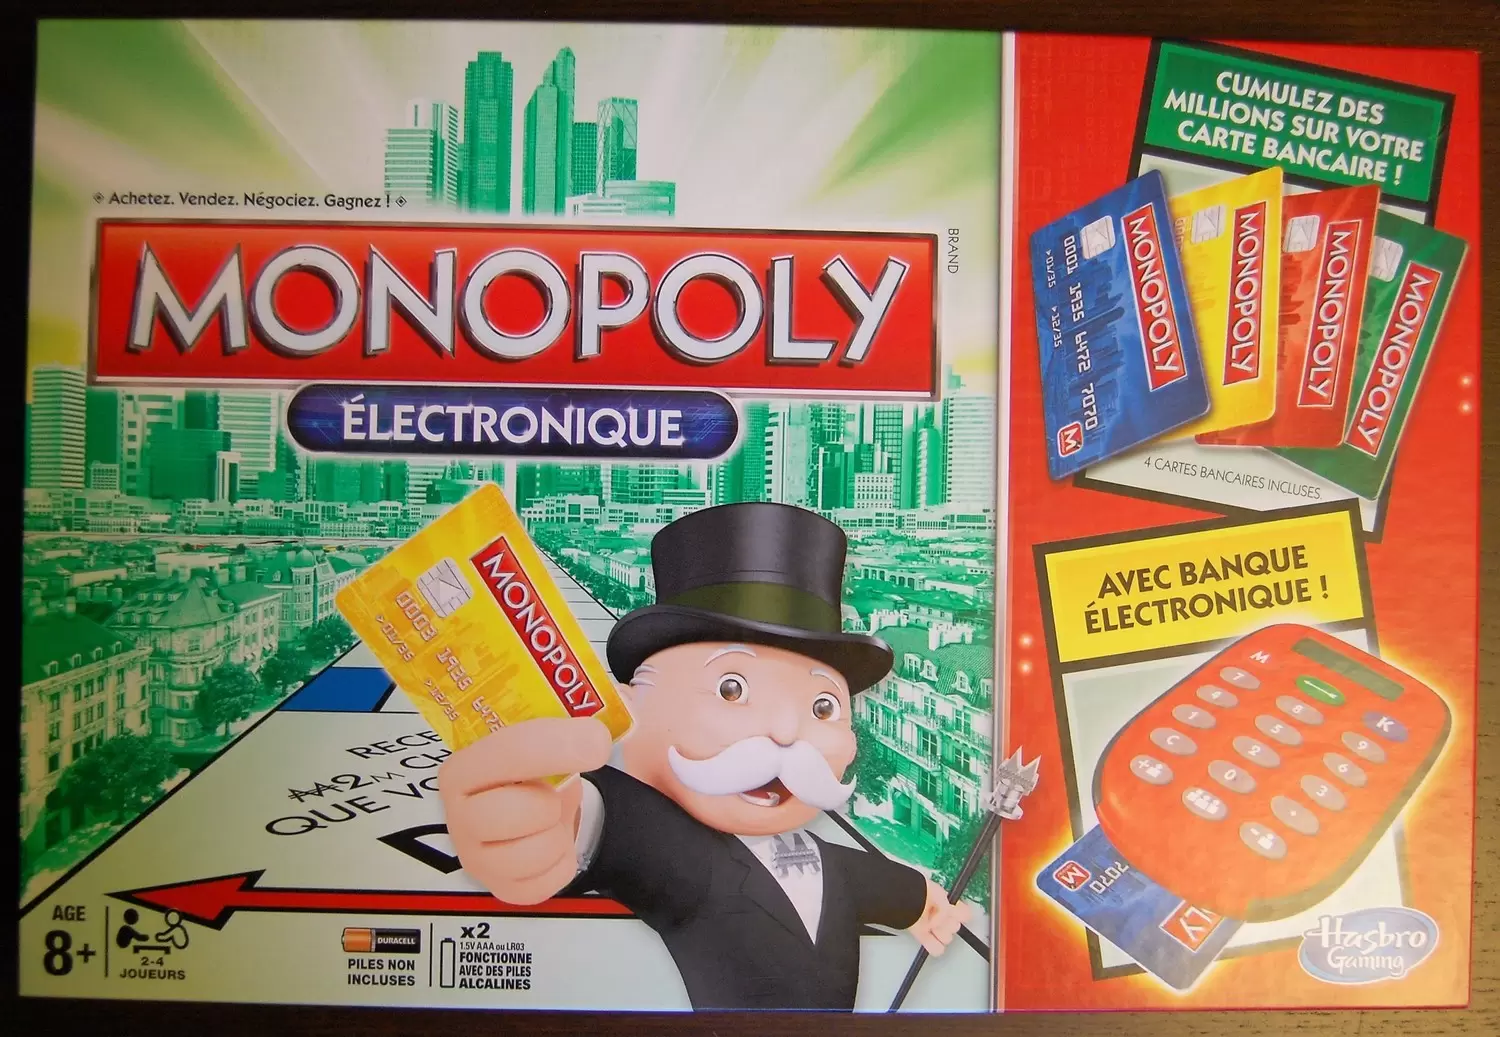 Monopoly Original - Monopoly Electronique